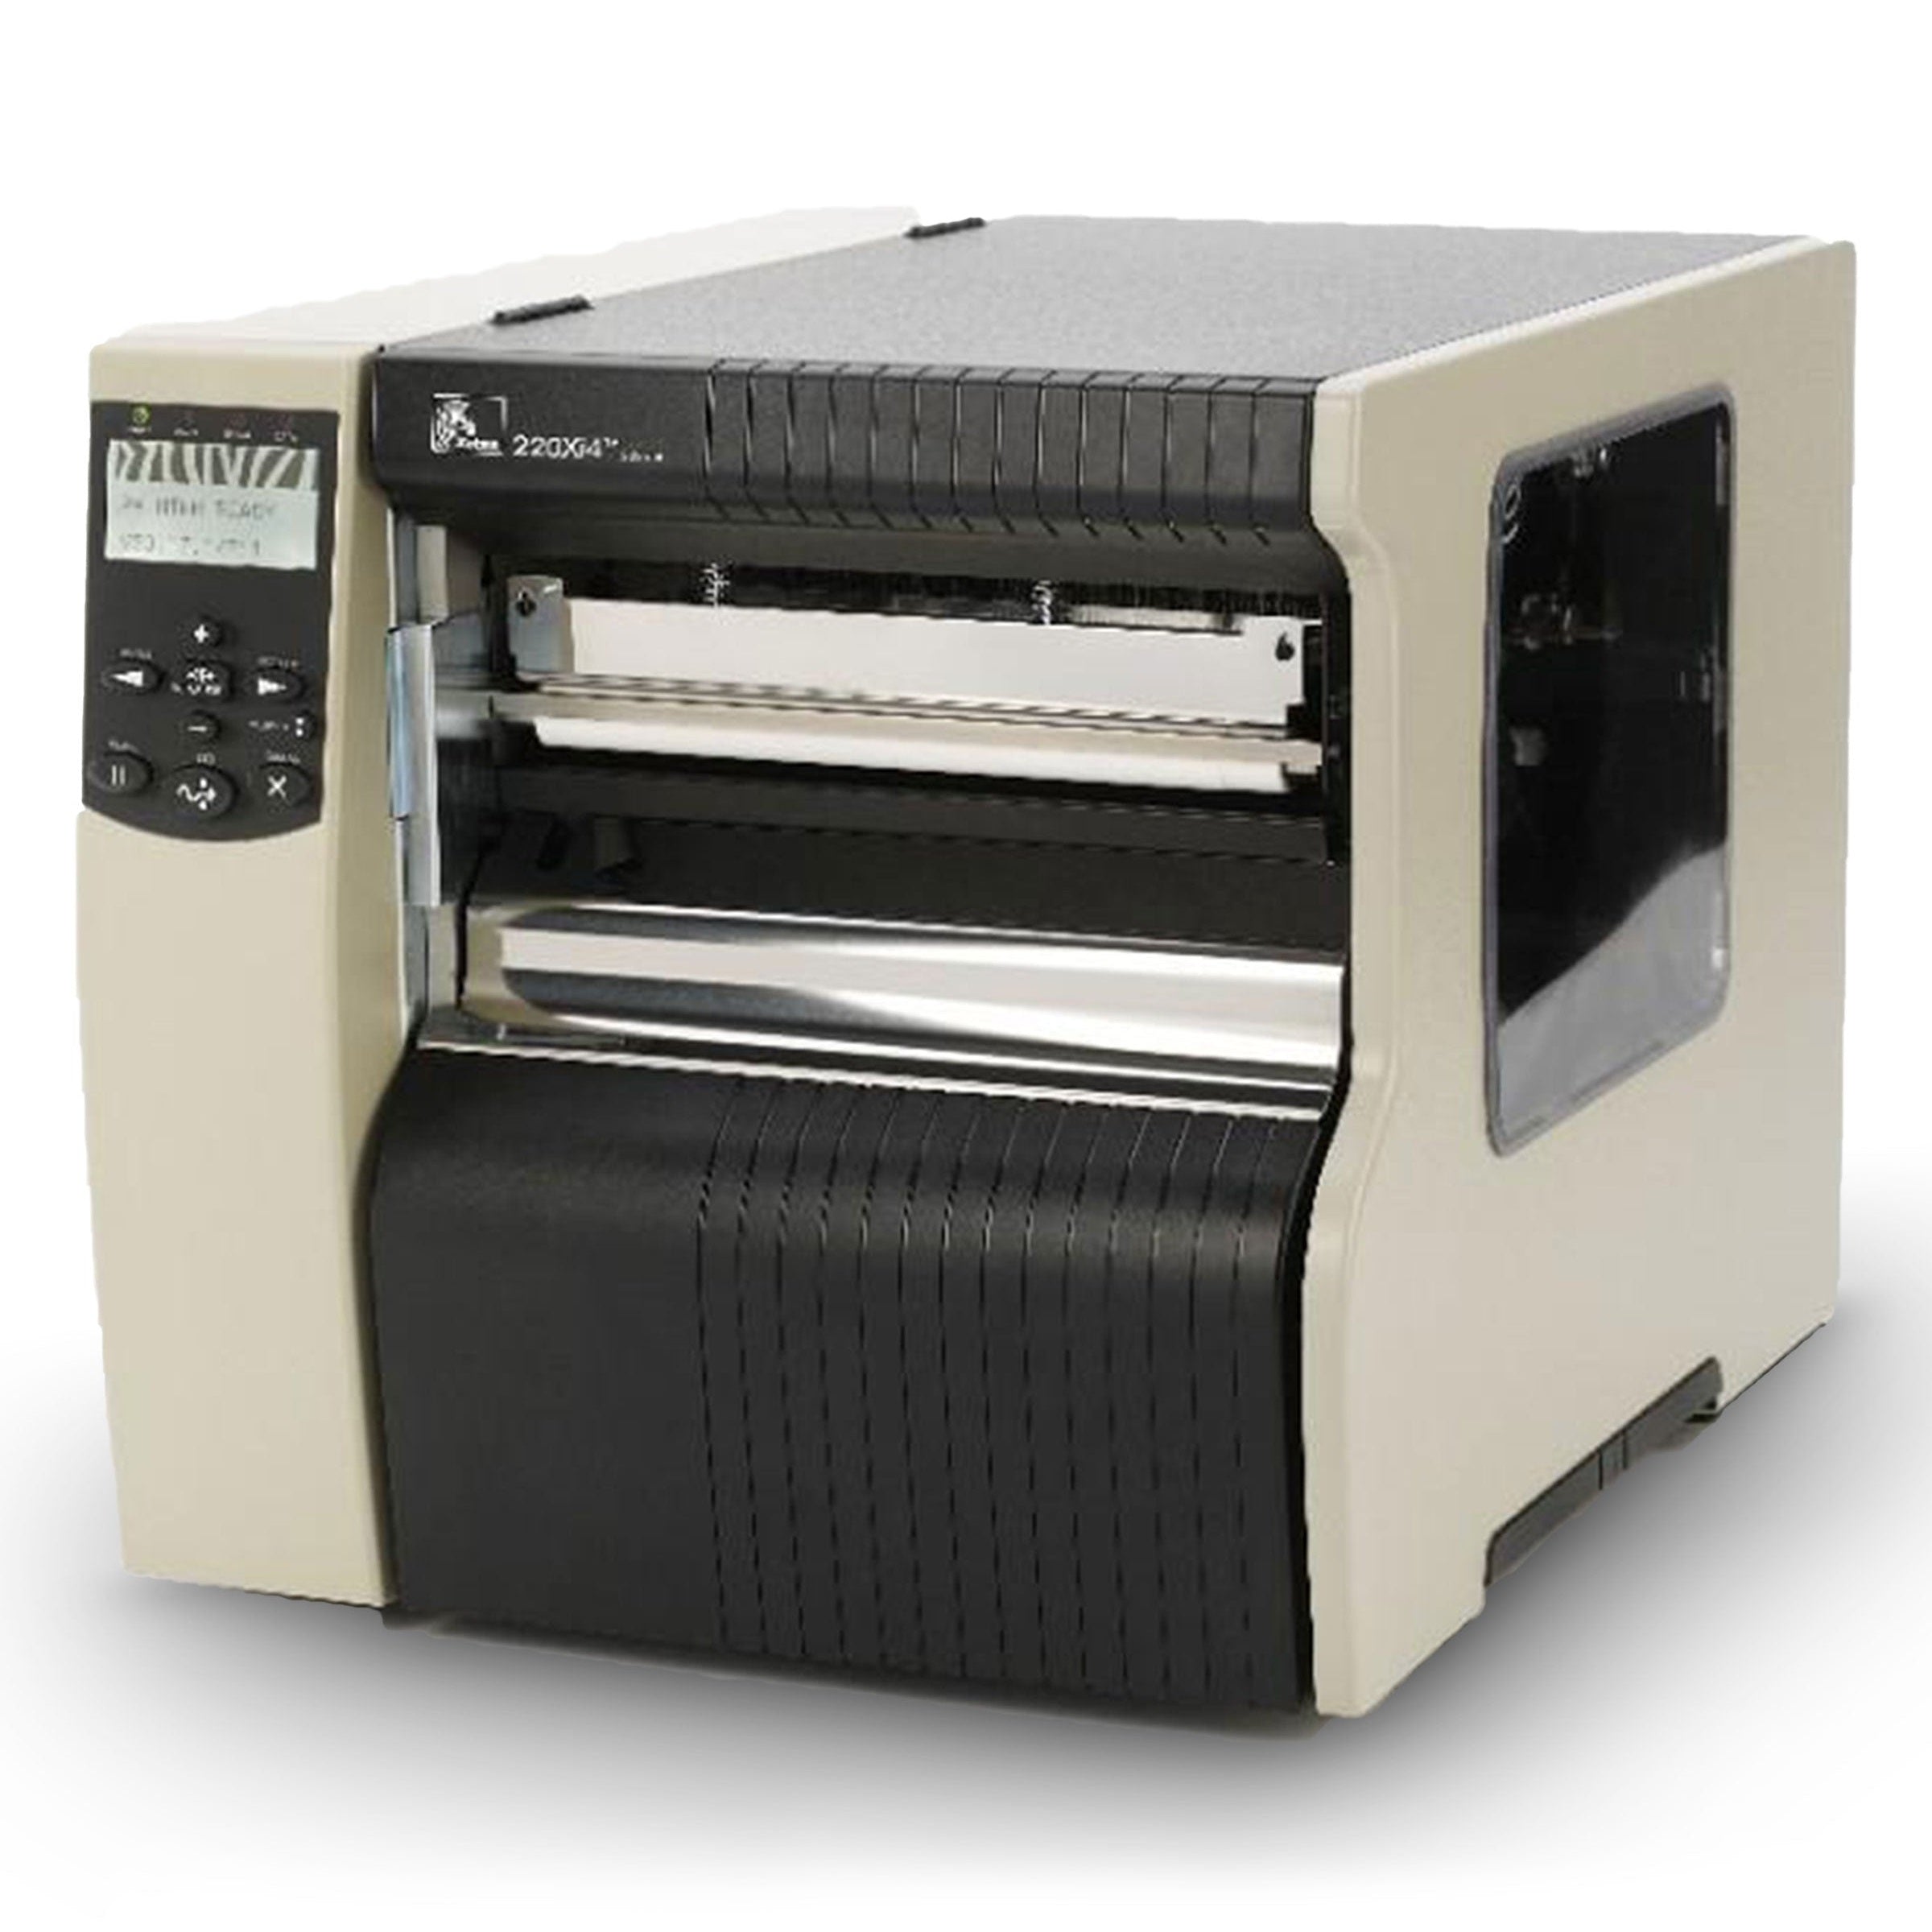 Absolute Toner $35/Month Zebra 220Xi4 Industrial Barcode Label Thermal Printer Printers/Copiers